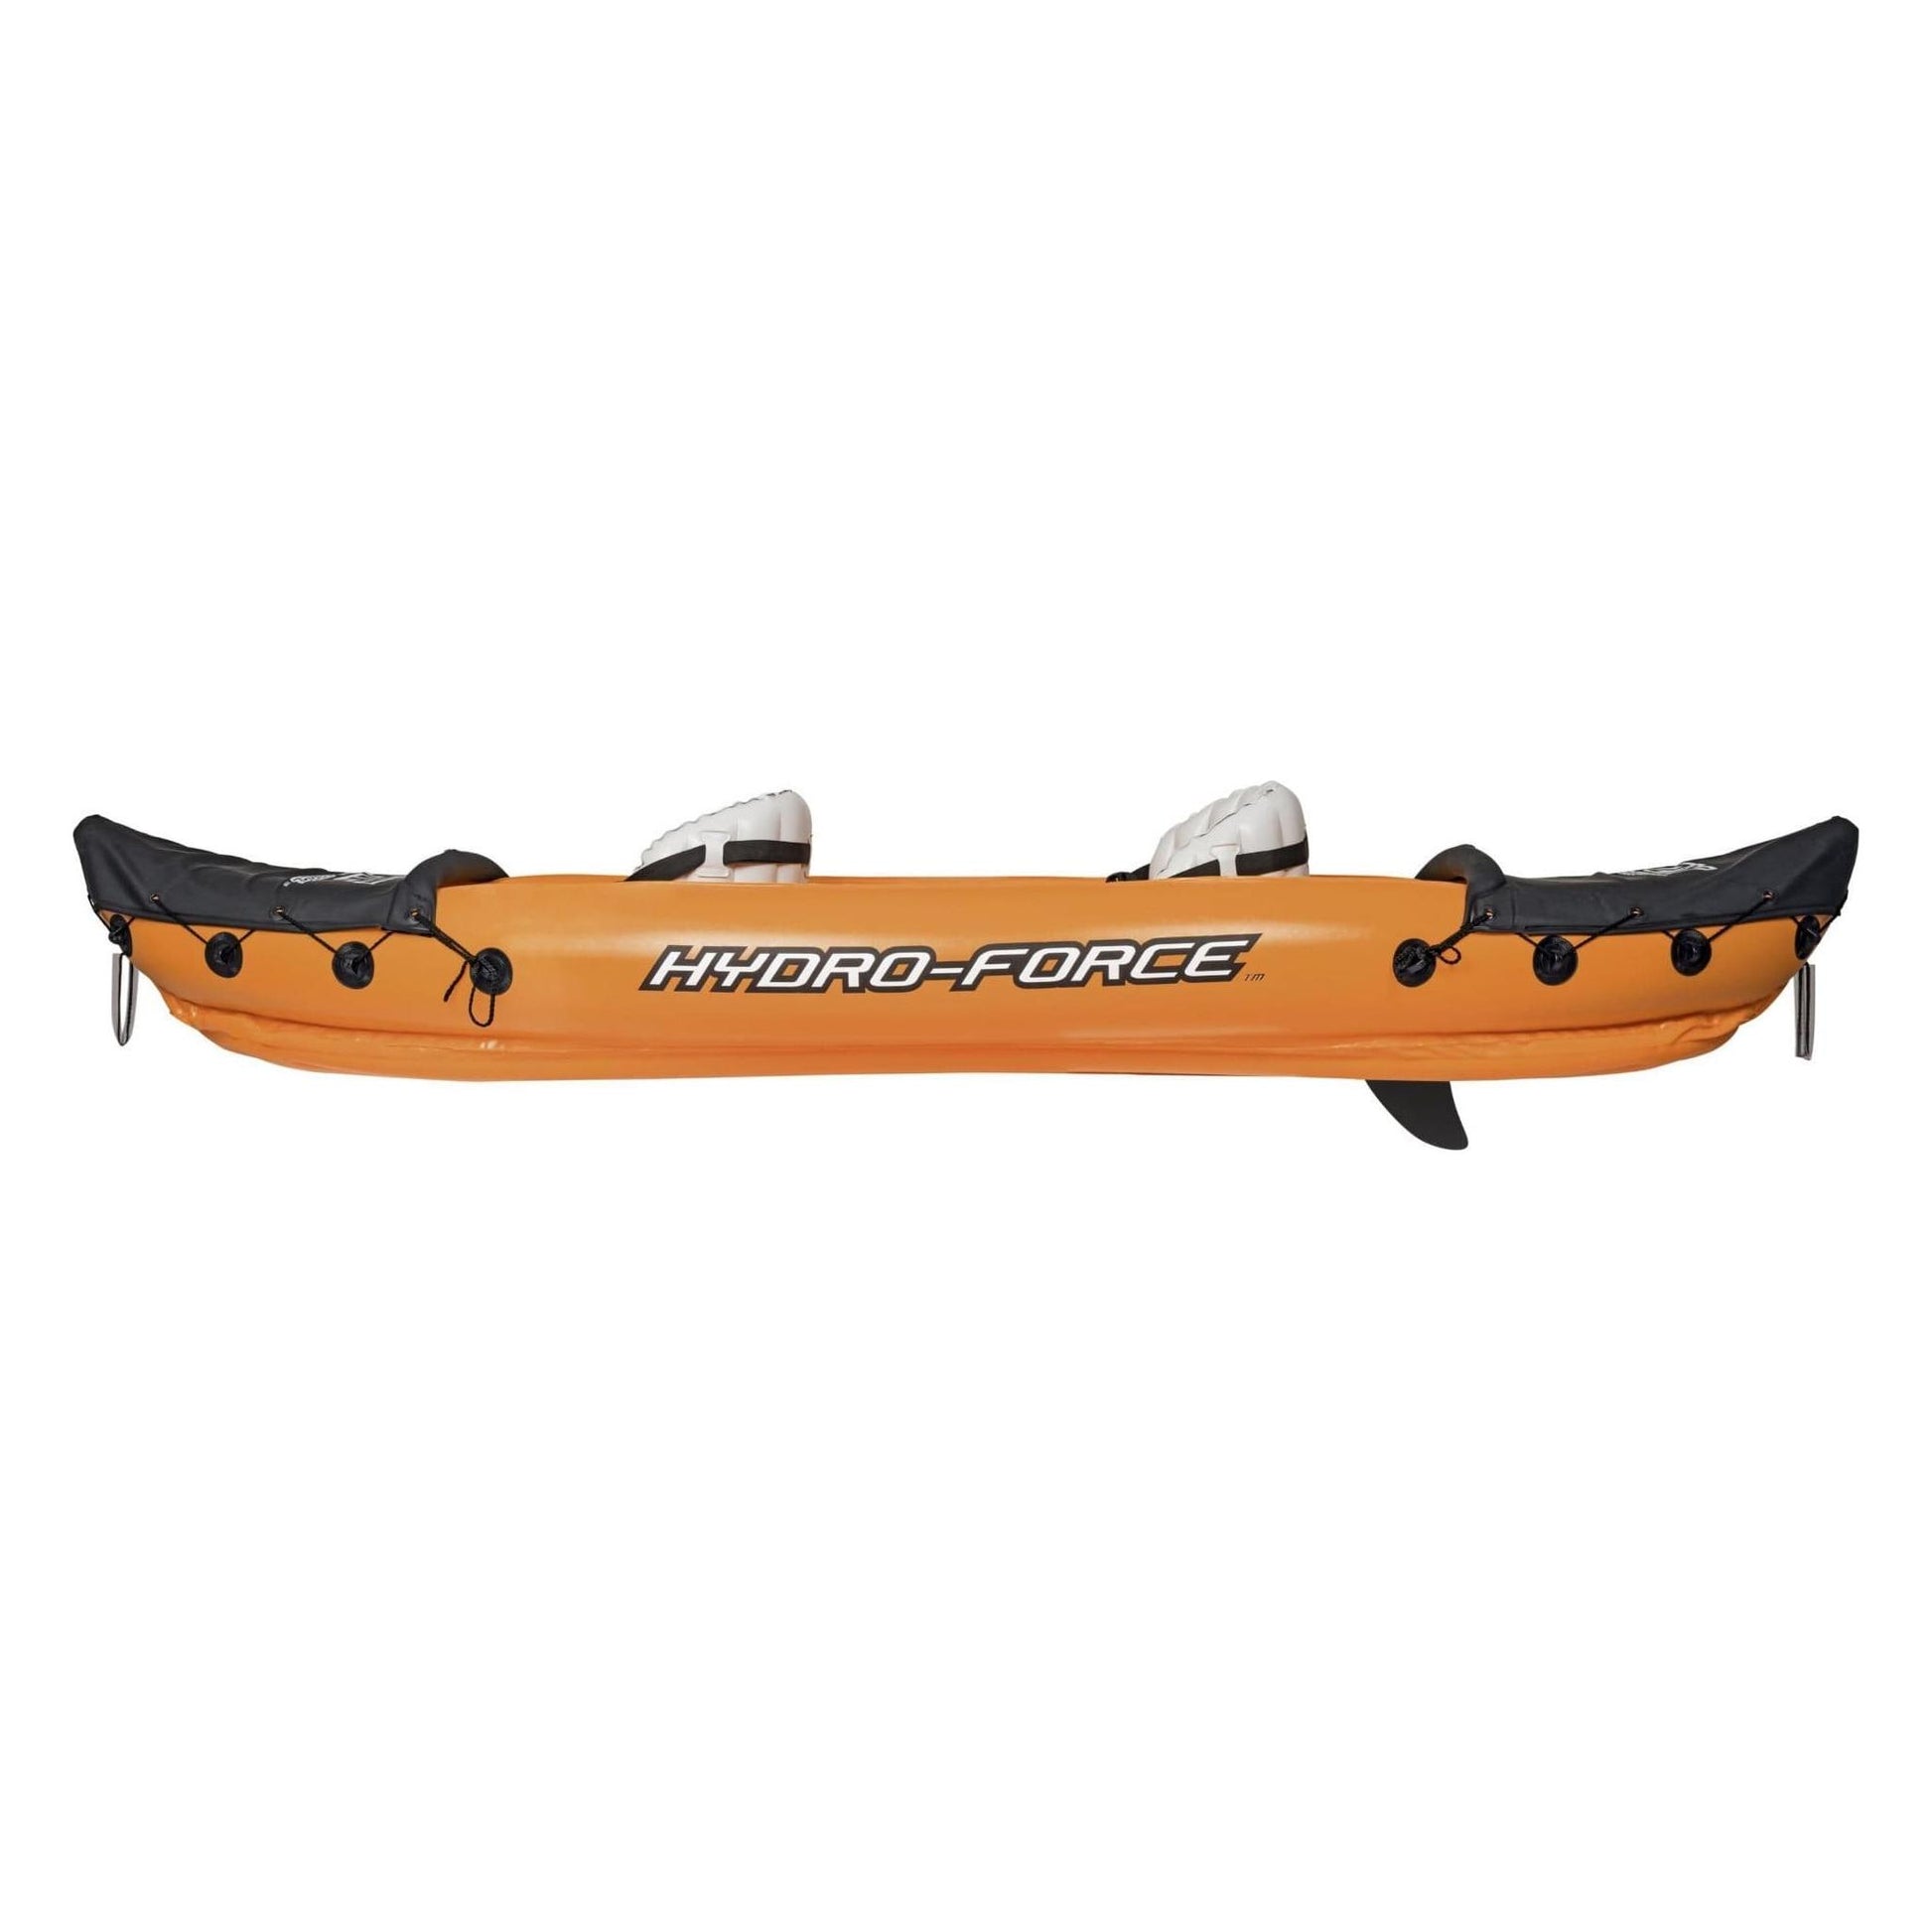 Bestway Hydro-Force Lite-Rapid X2 Inflatable Kayak Inflatable Kayak 2 Person Kit